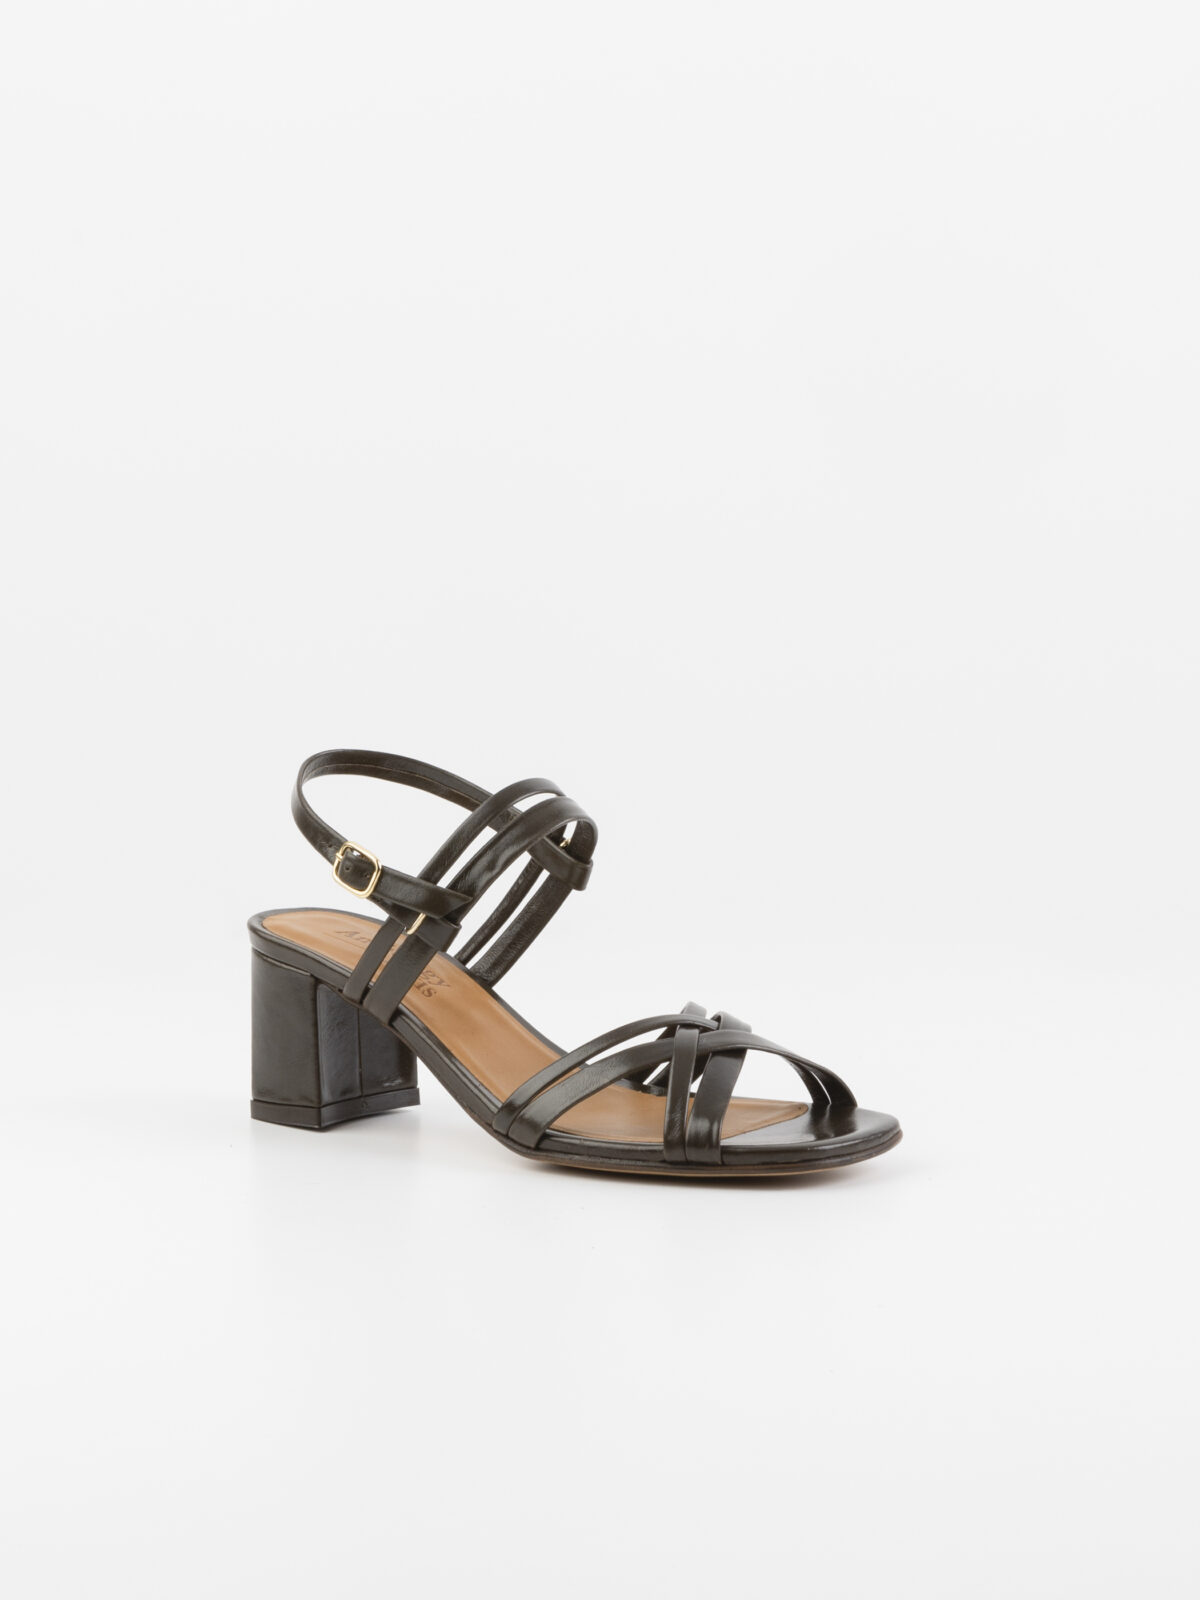 cluny-leather-heels-sandals-crossed-straps-square-heel-anthology-paris-matchboxathens